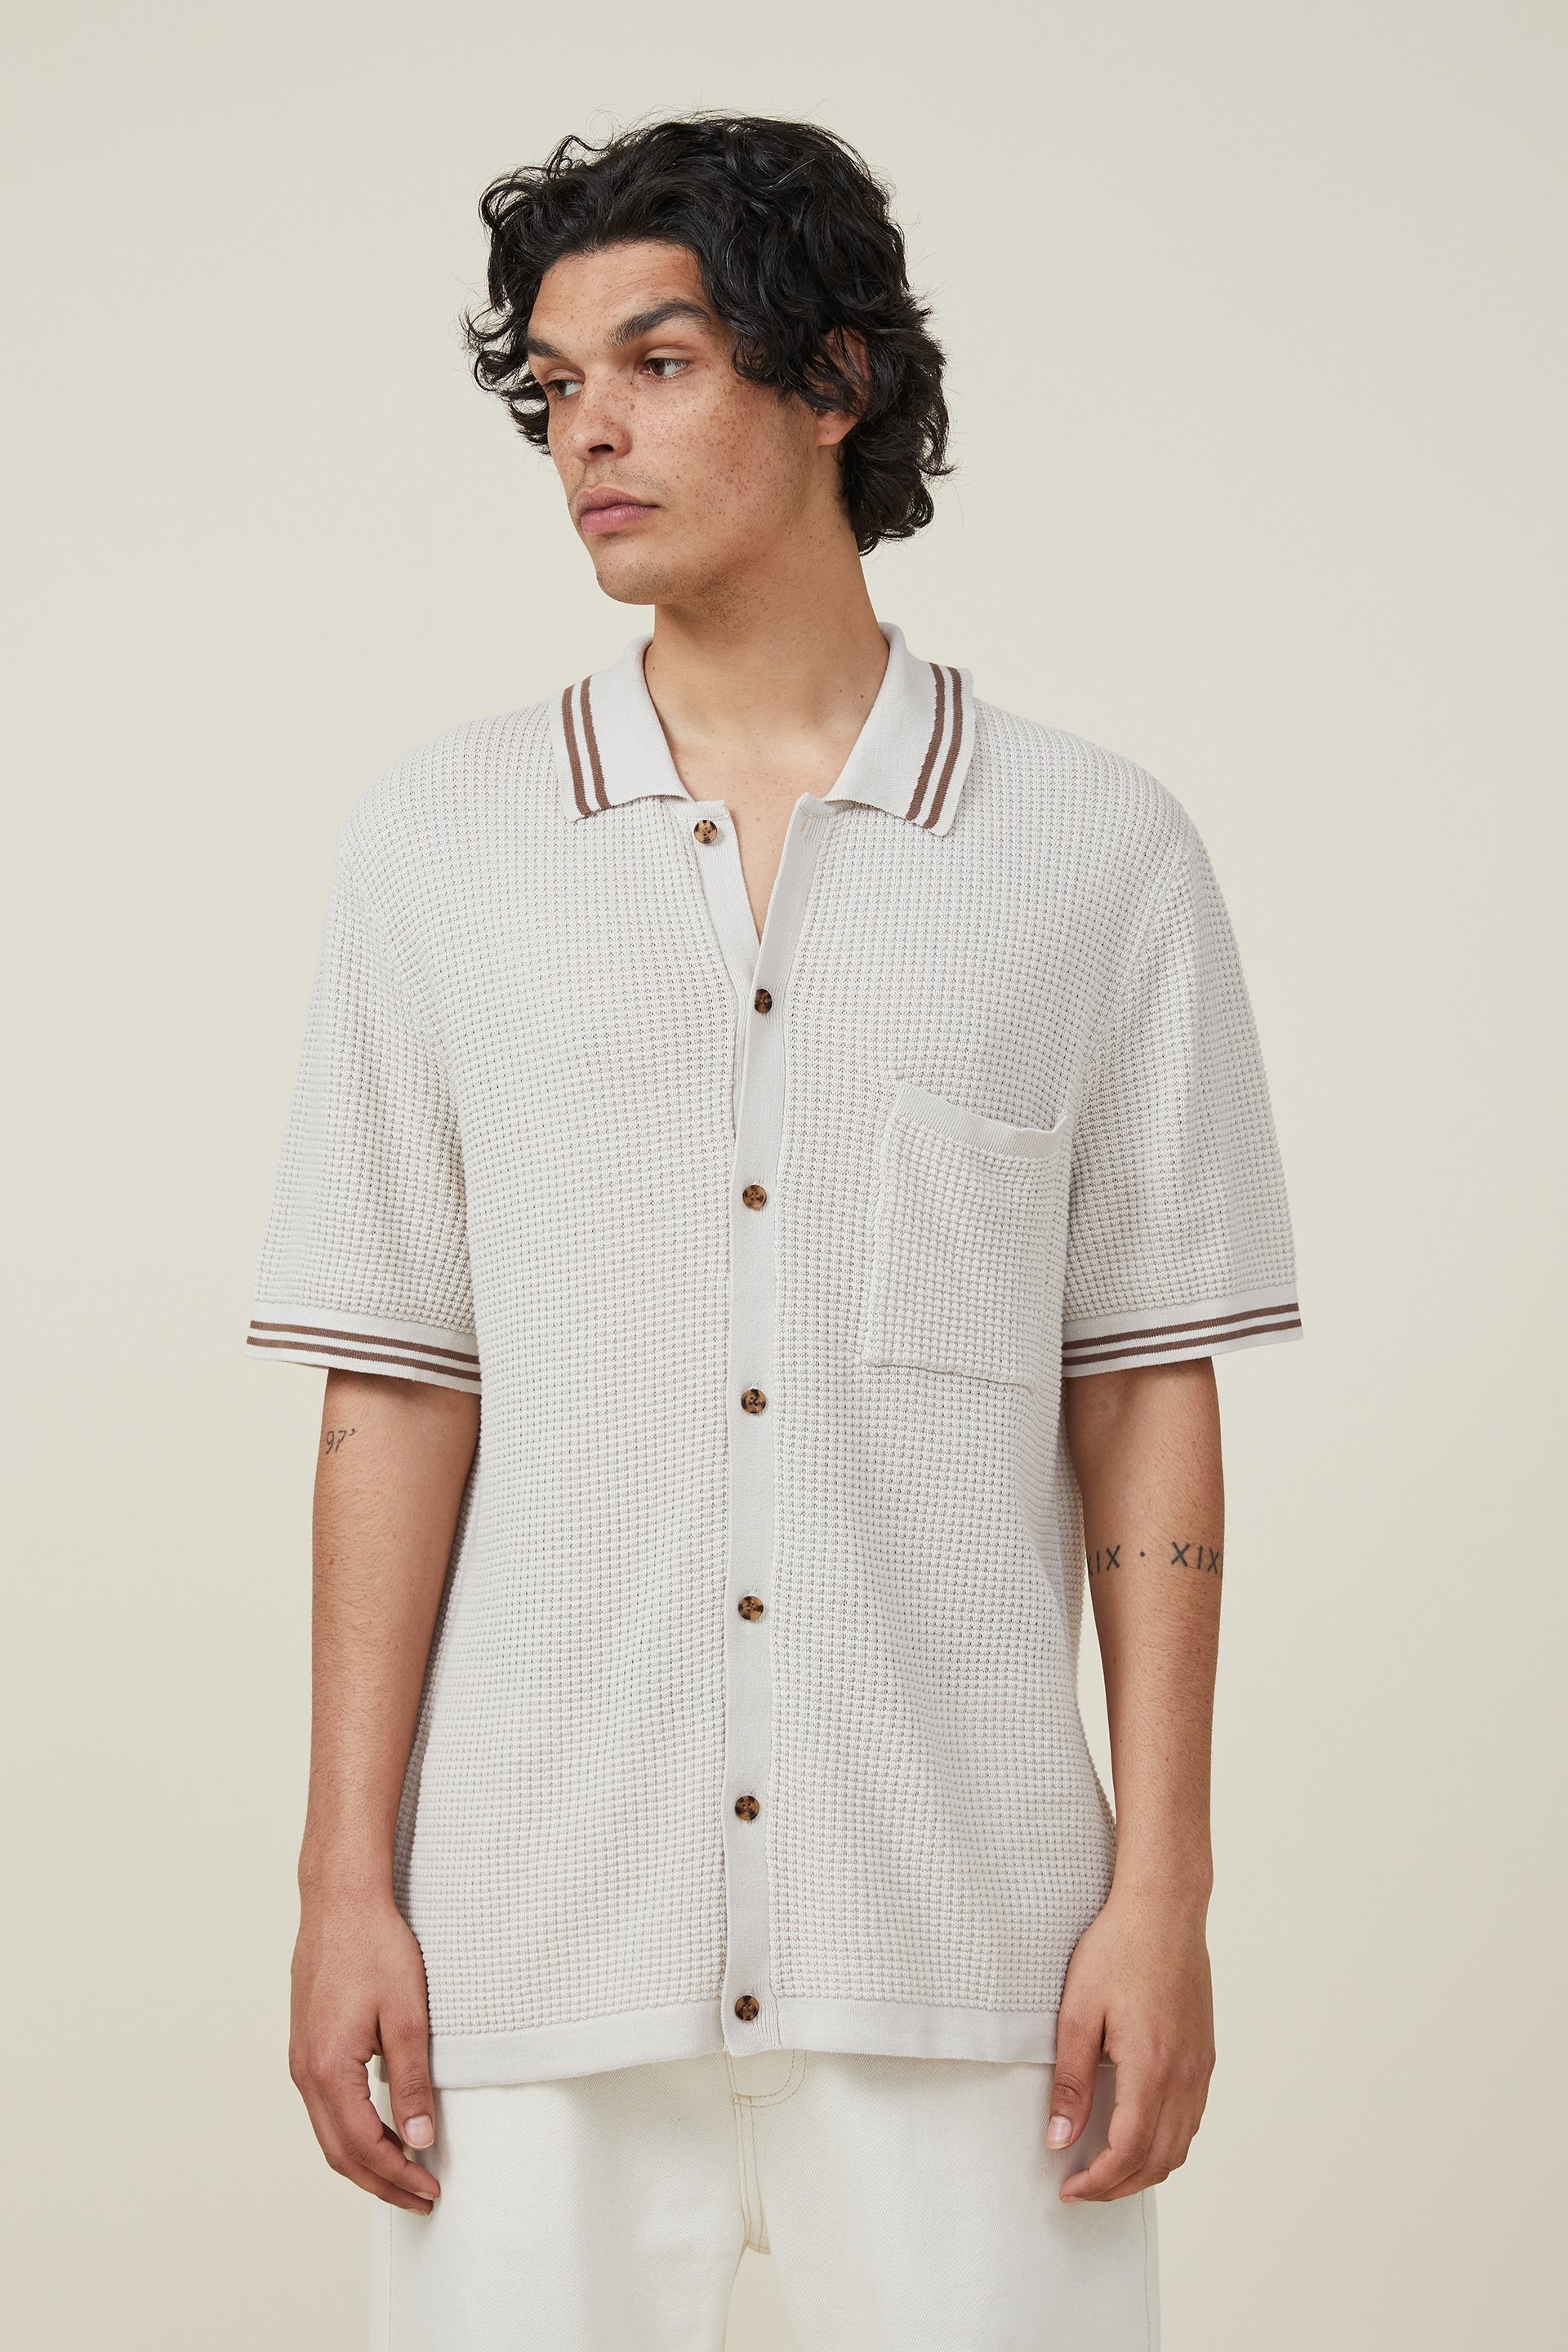 Cotton On Men - Pablo Short Sleeve Shirt - Ecru